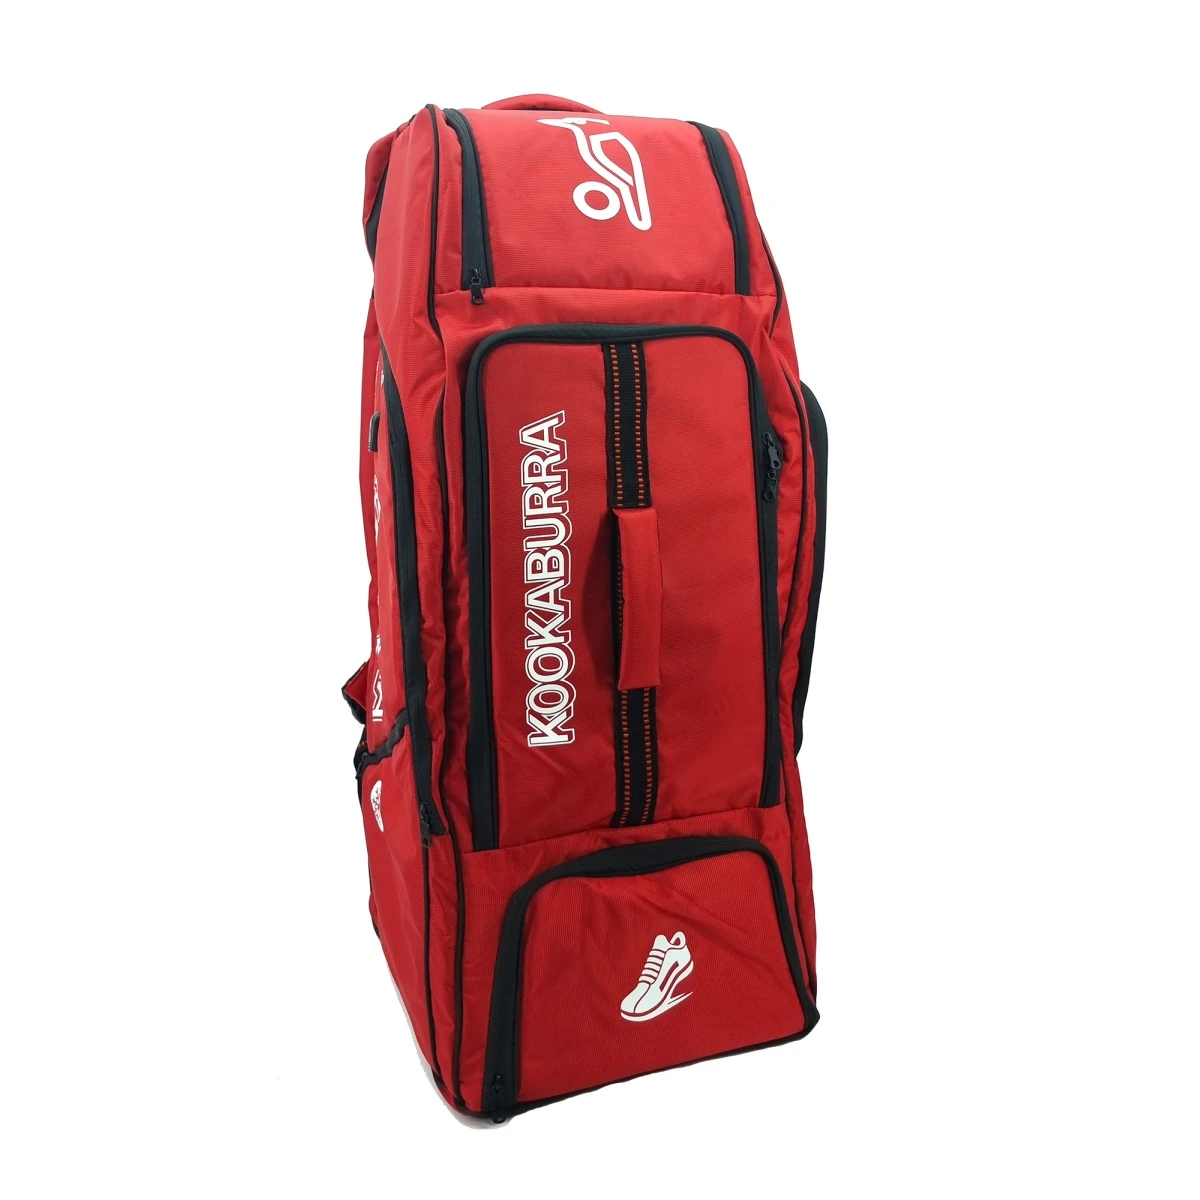 AXO Wheelie Bag - Reviews, Comparisons, Specs - Gear Bags & Luggage - Vital  MX